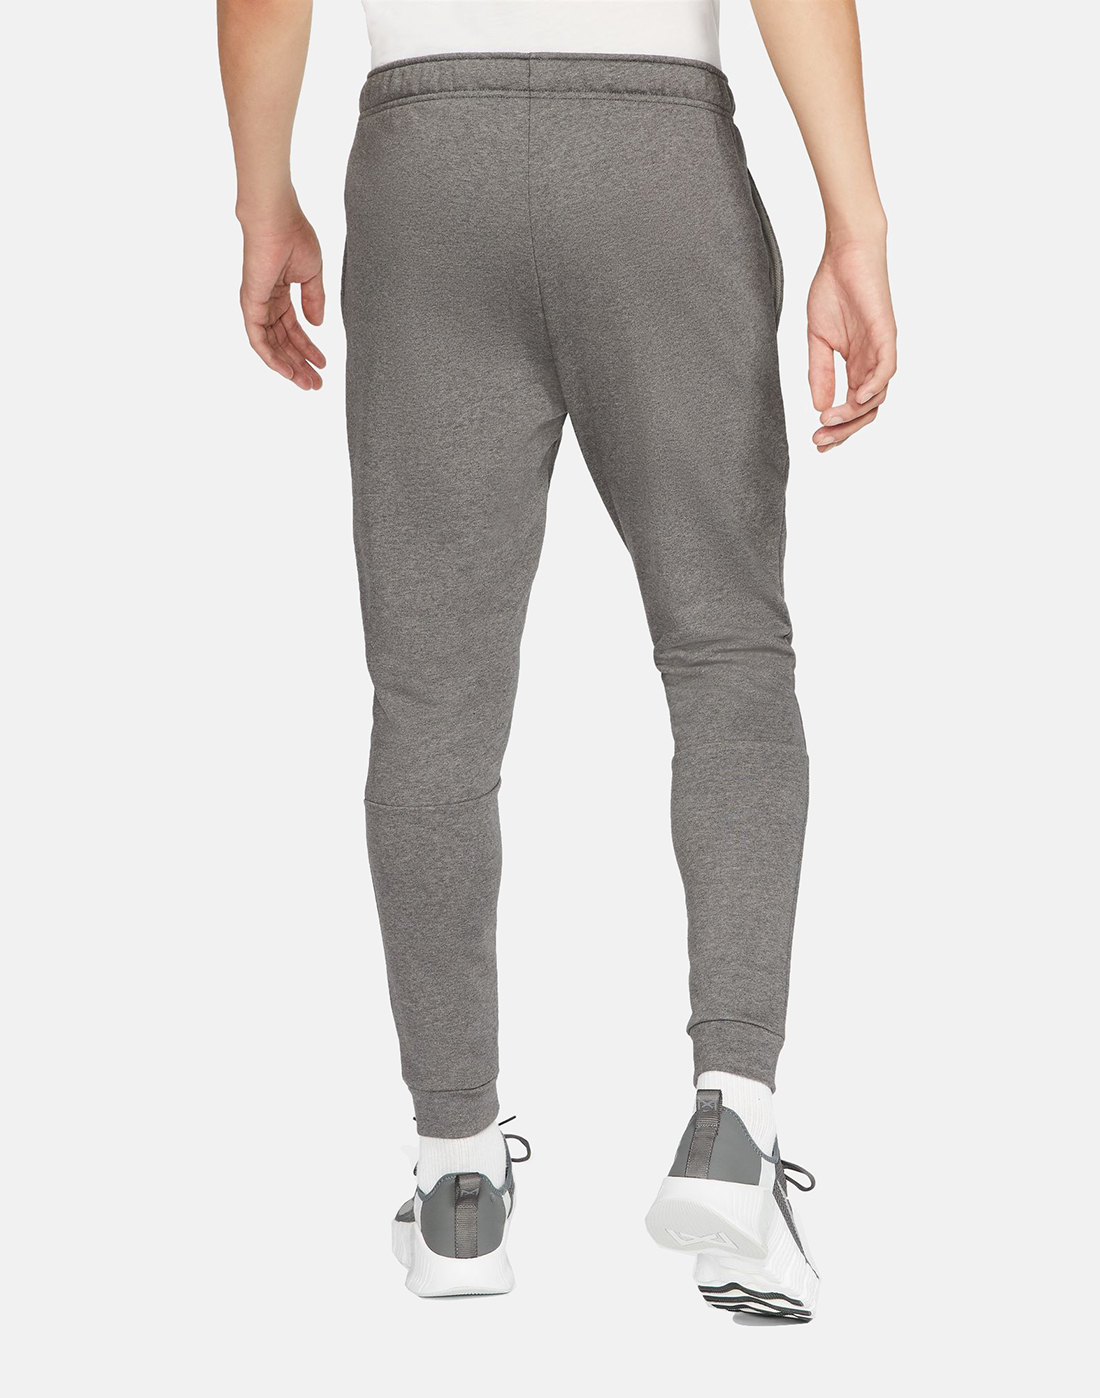 Nike Mens Taper Fleece Pants - Grey | Life Style Sports IE